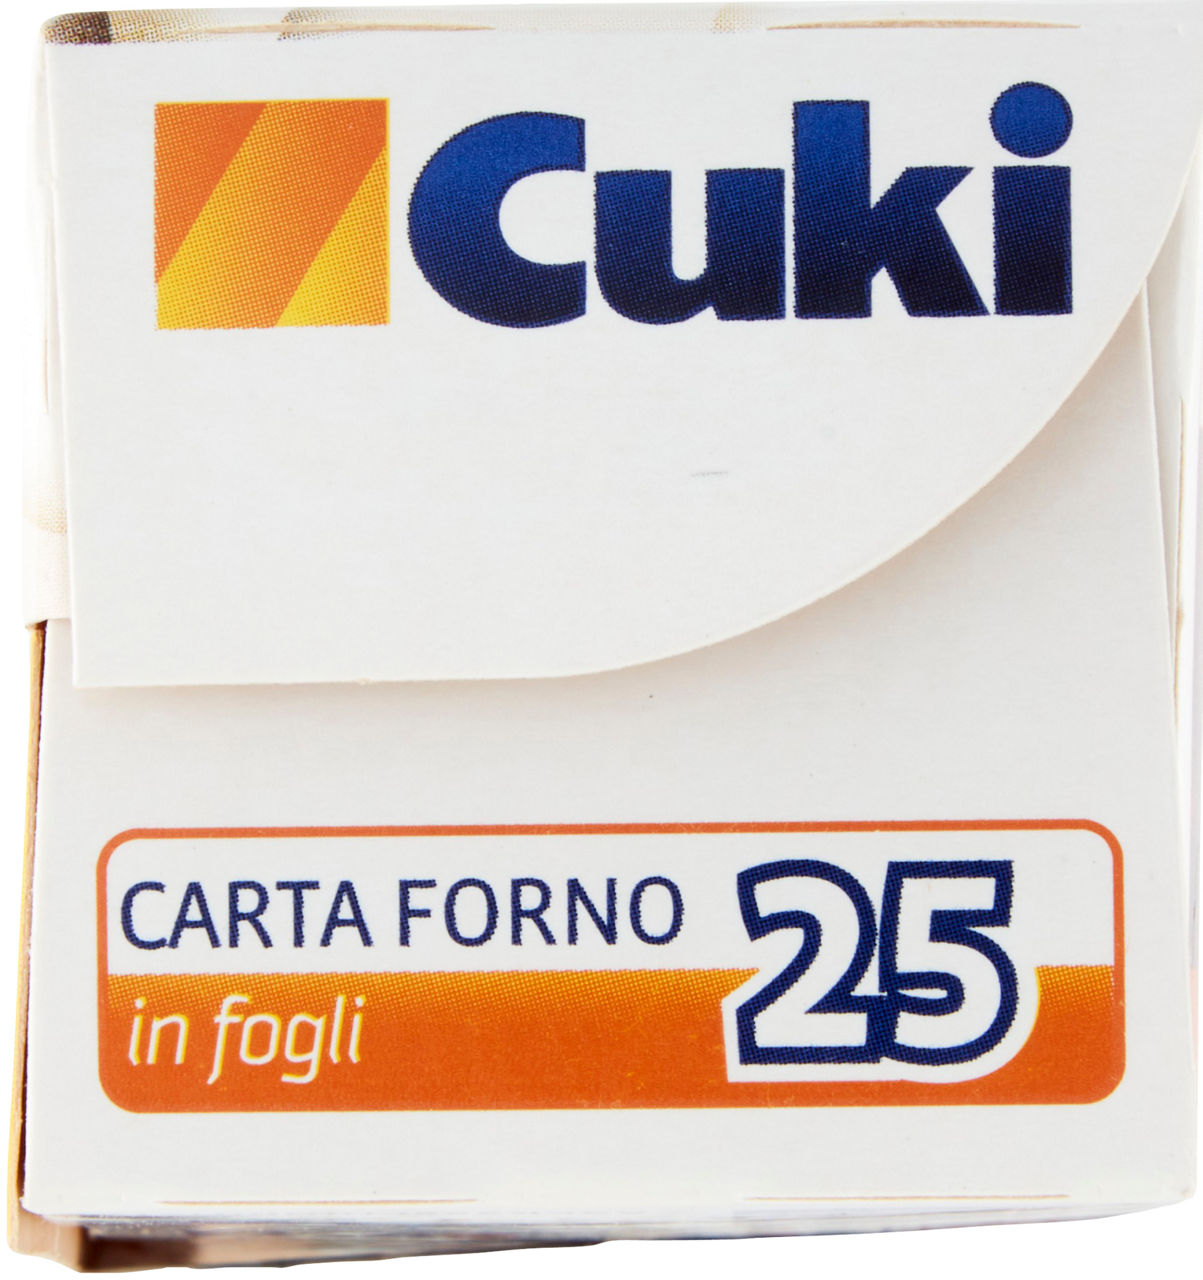 CARTA FORNO CUKI 9,5 MT. FOGLI CM.33X38 X 25 SCATOLA PZ.1 - 3